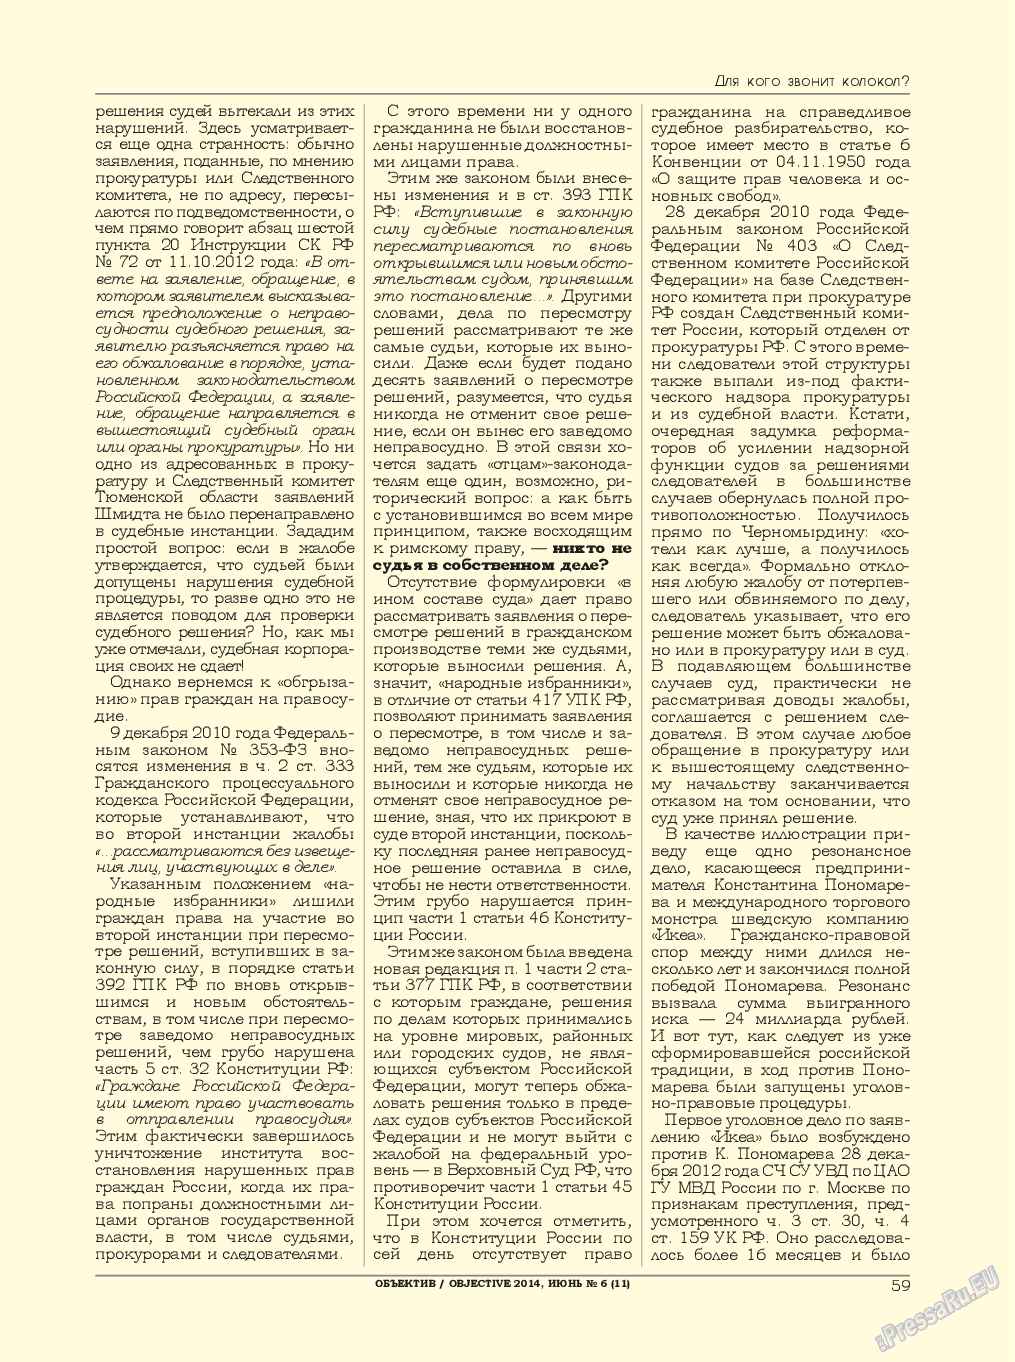 Объектив EU, журнал. 2014 №6 стр.59